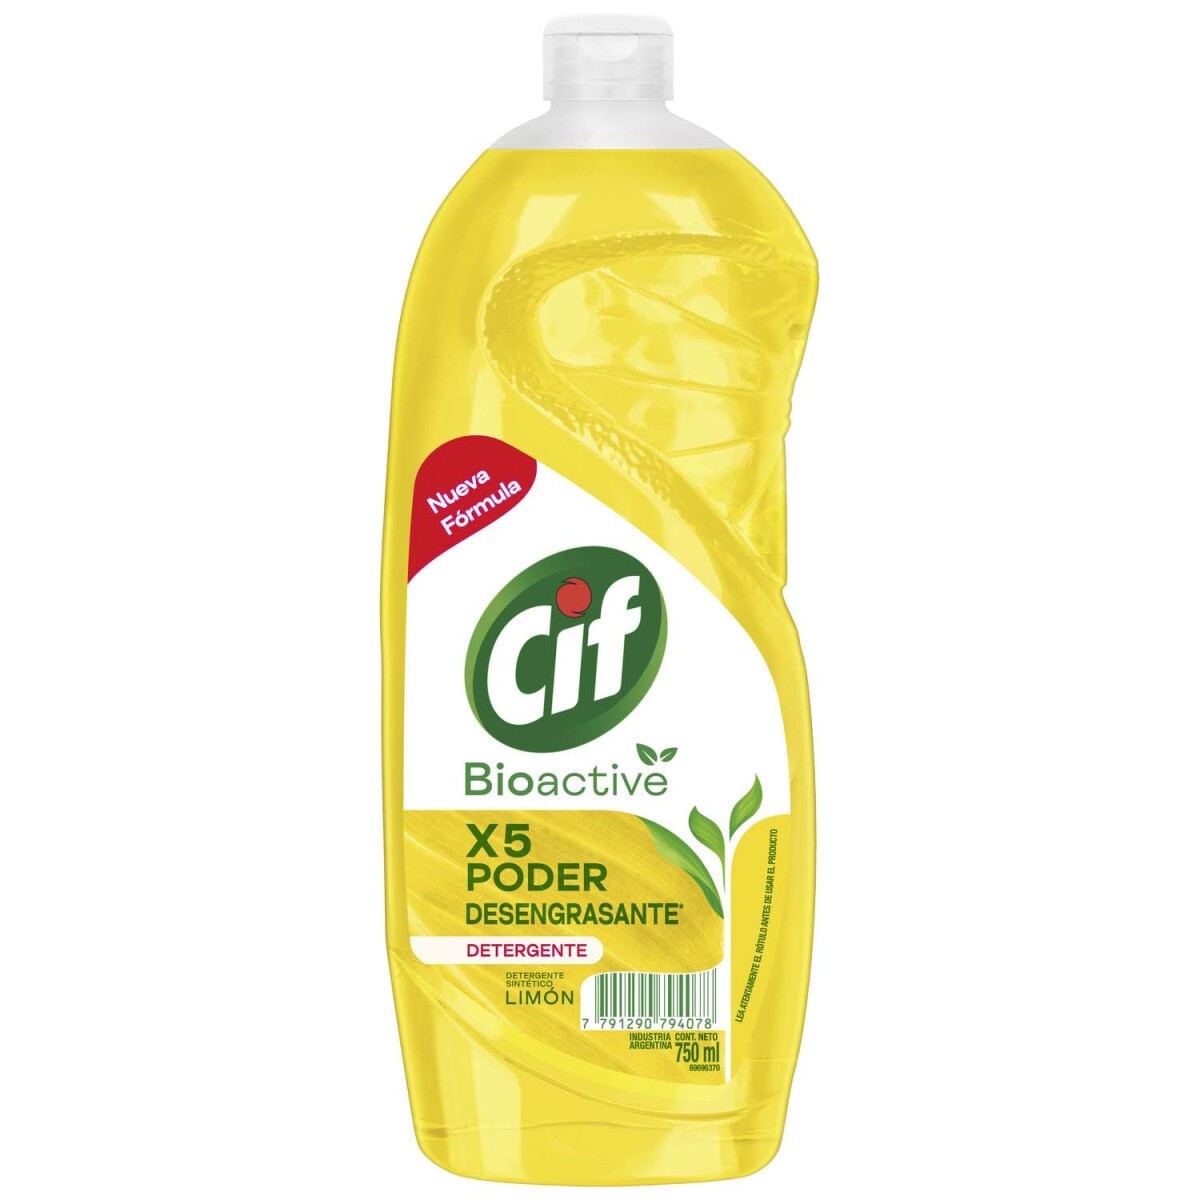 Cif Detergente Limon 